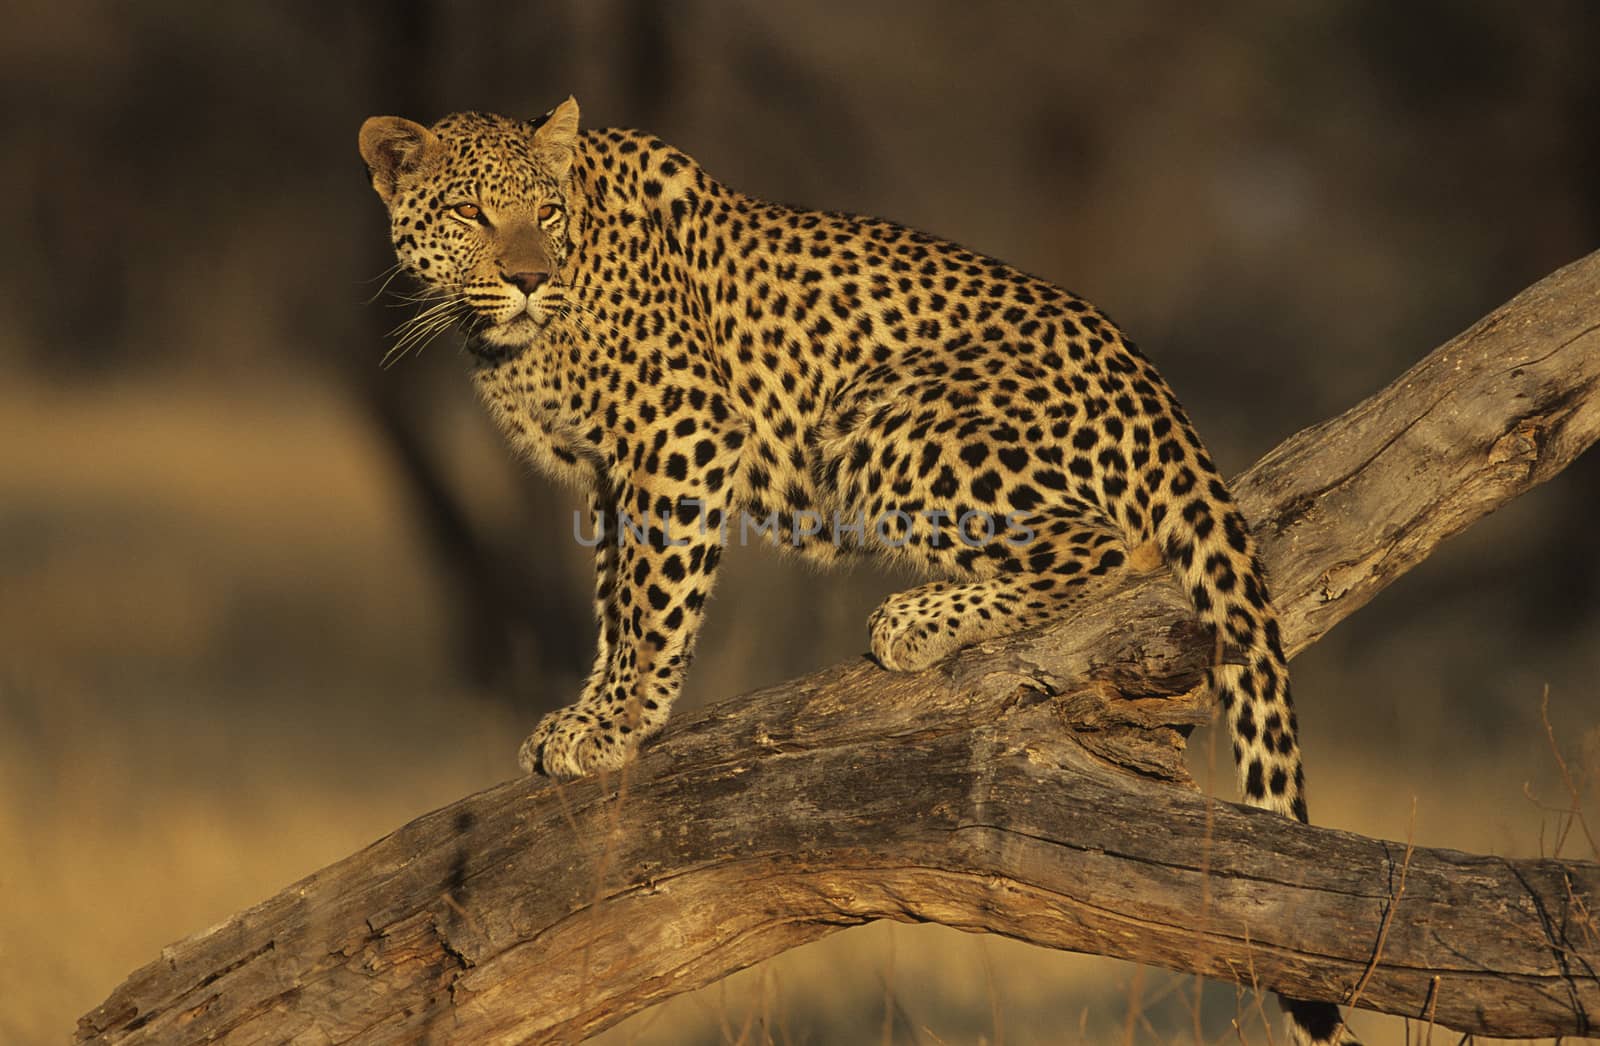 Leopard on Branch by Jaanaaa